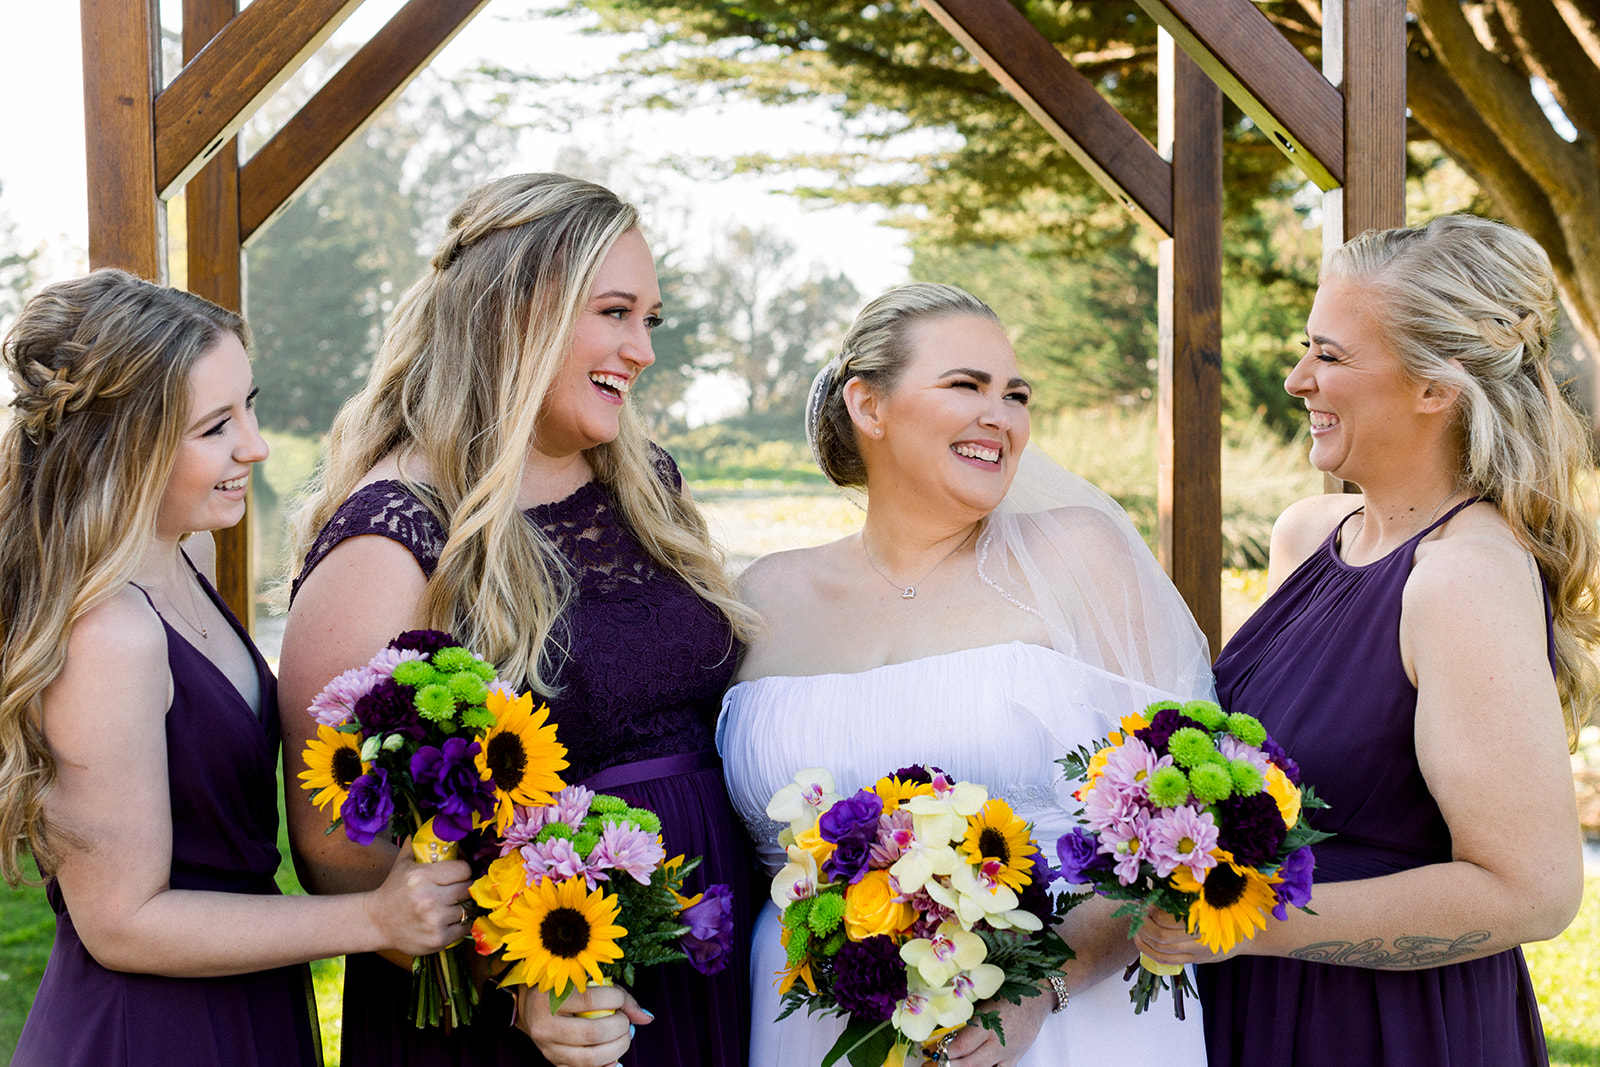 Cypress Ridge Wedding Photos: Your Love Story in Frames